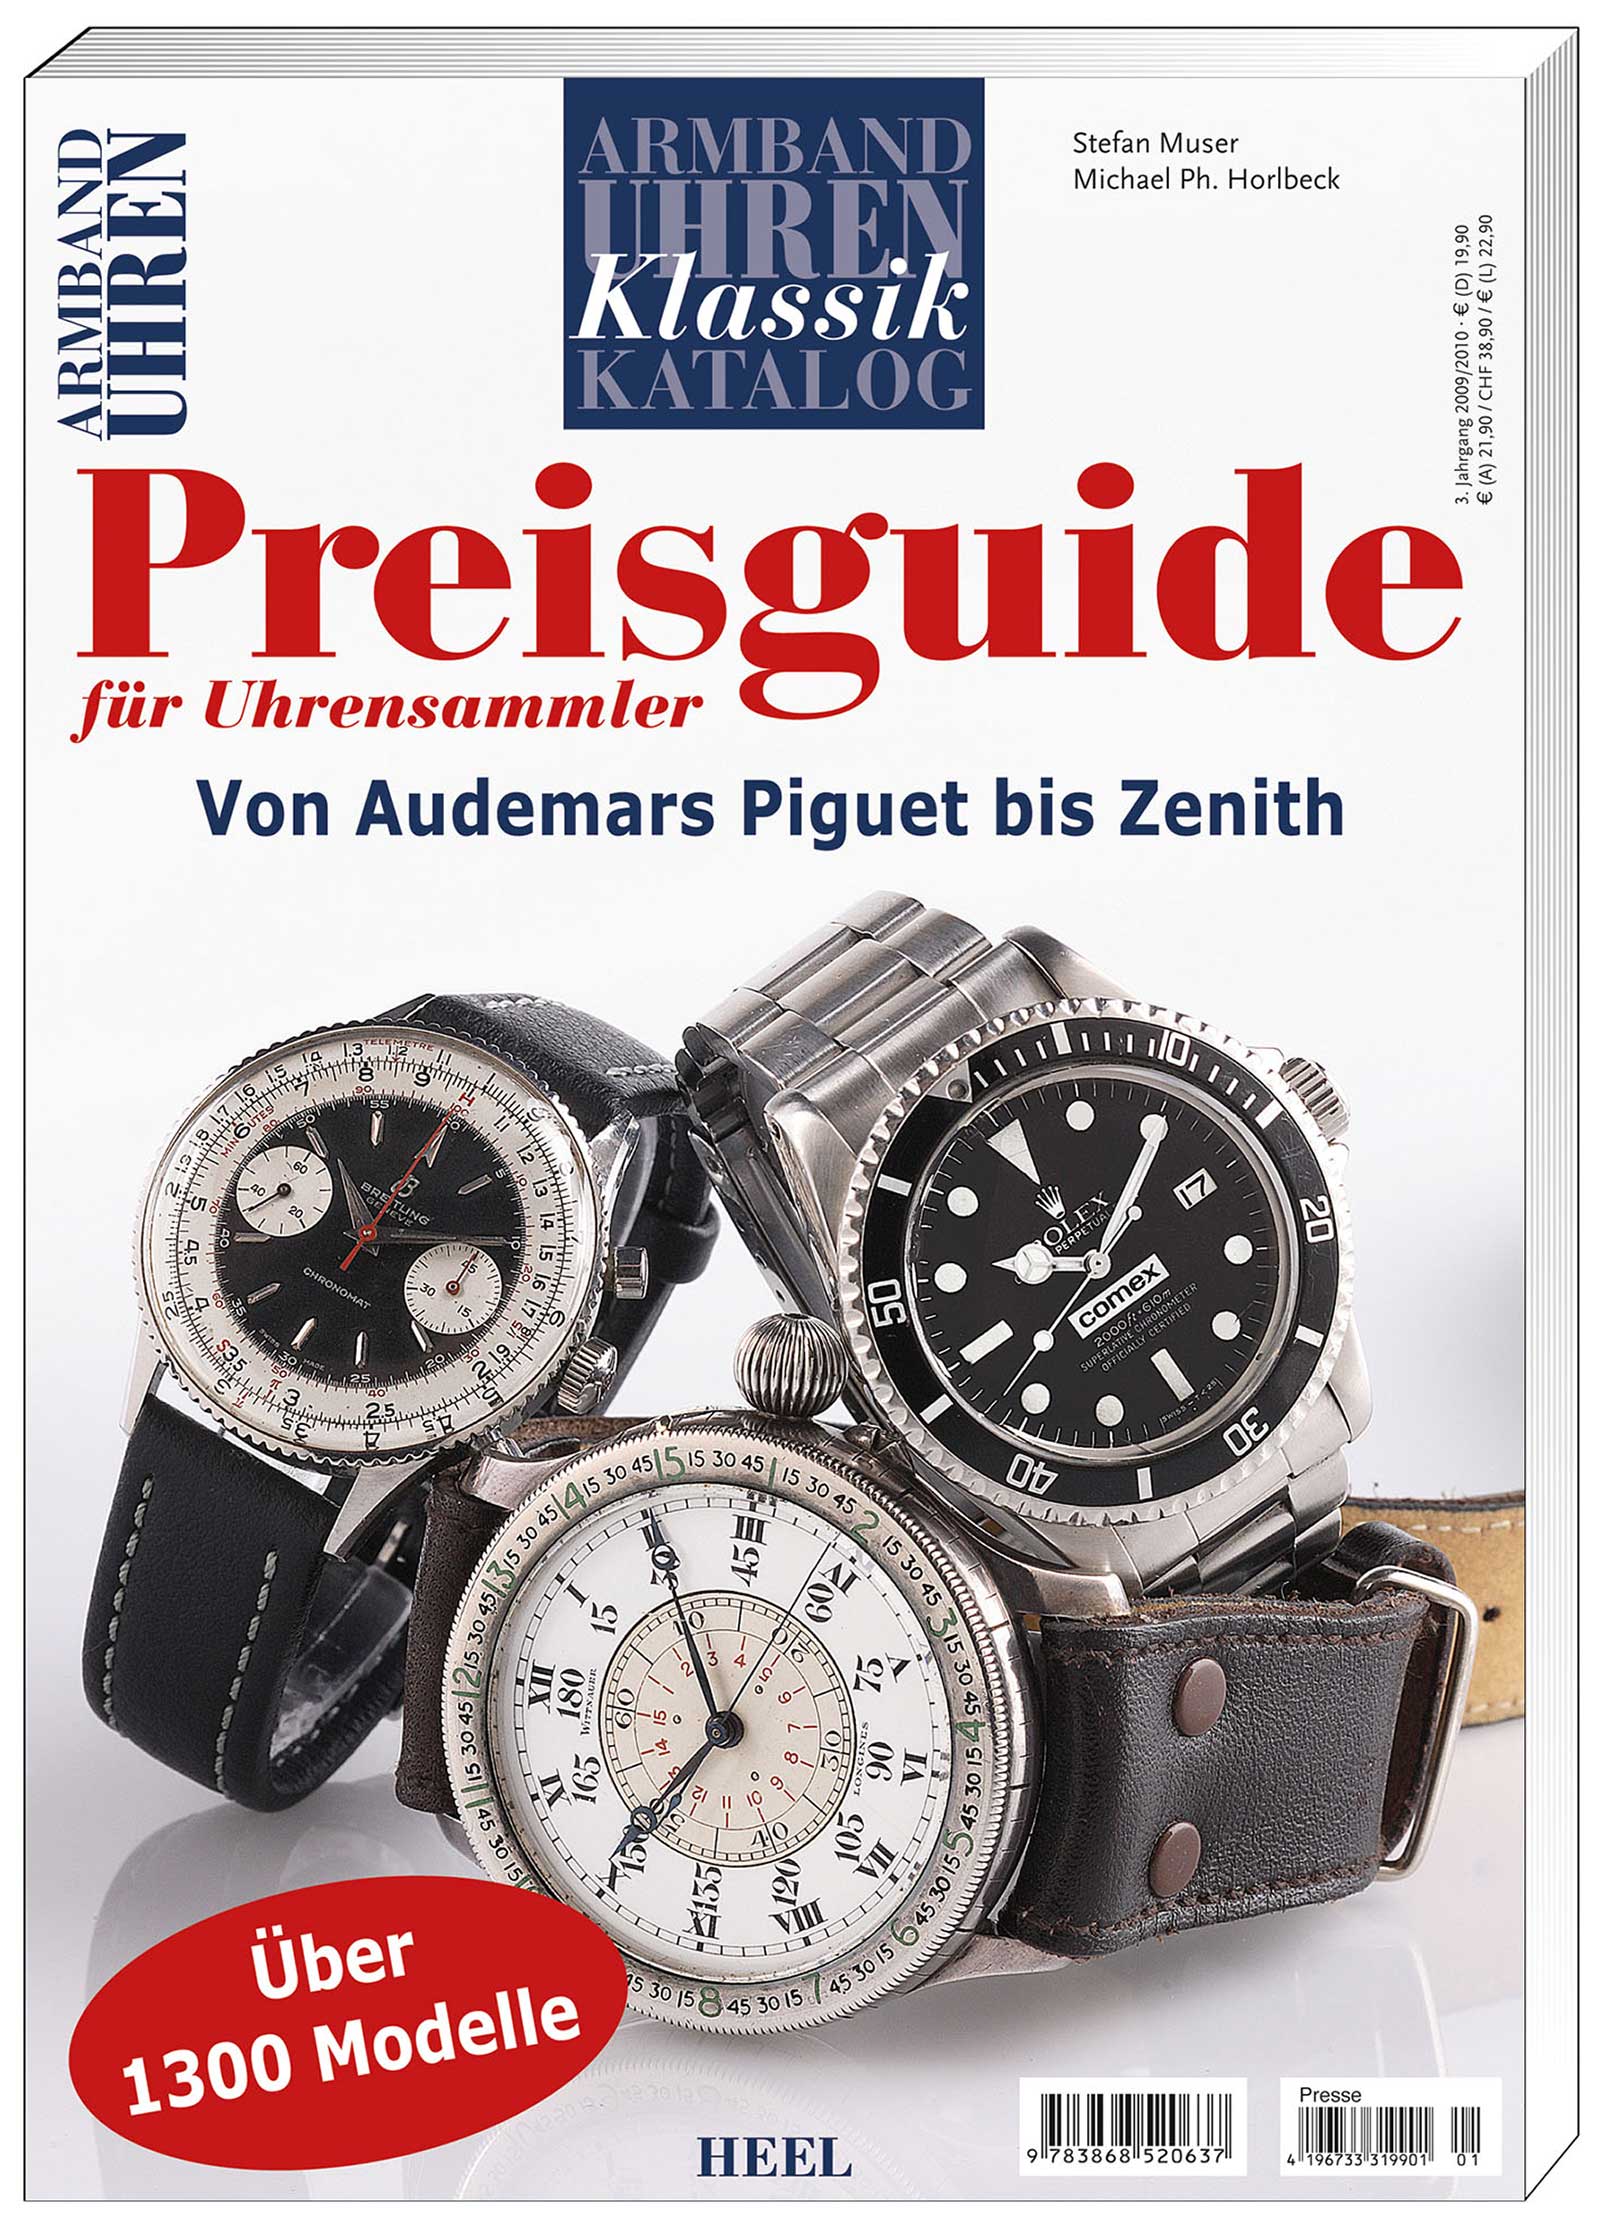 Armbanduhren Klassik Katalog 2009